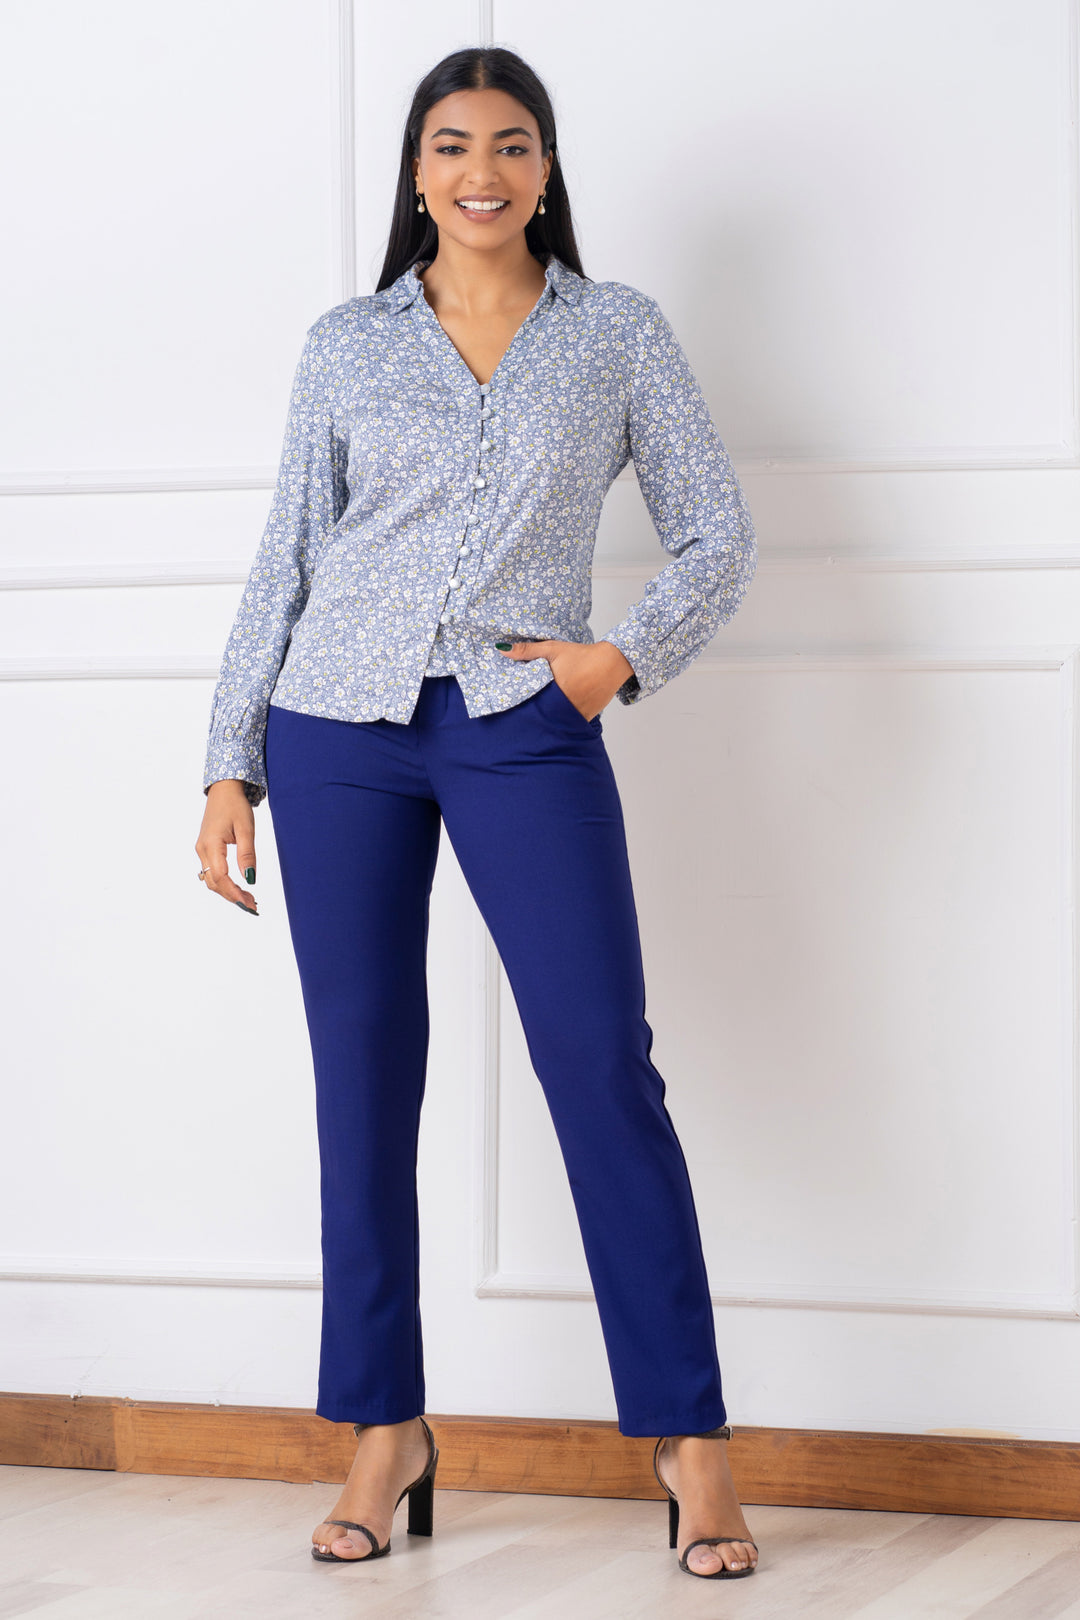 Printed Front Button Shirt - Regular Fit, Top, Long Sleeves, New Arrivals, Office Tops, Regular Fit, Shirt, Shirt Collar, Smart Casual, Smart Casual Top, Work Top, workwear - MONDY, Sri Lanka